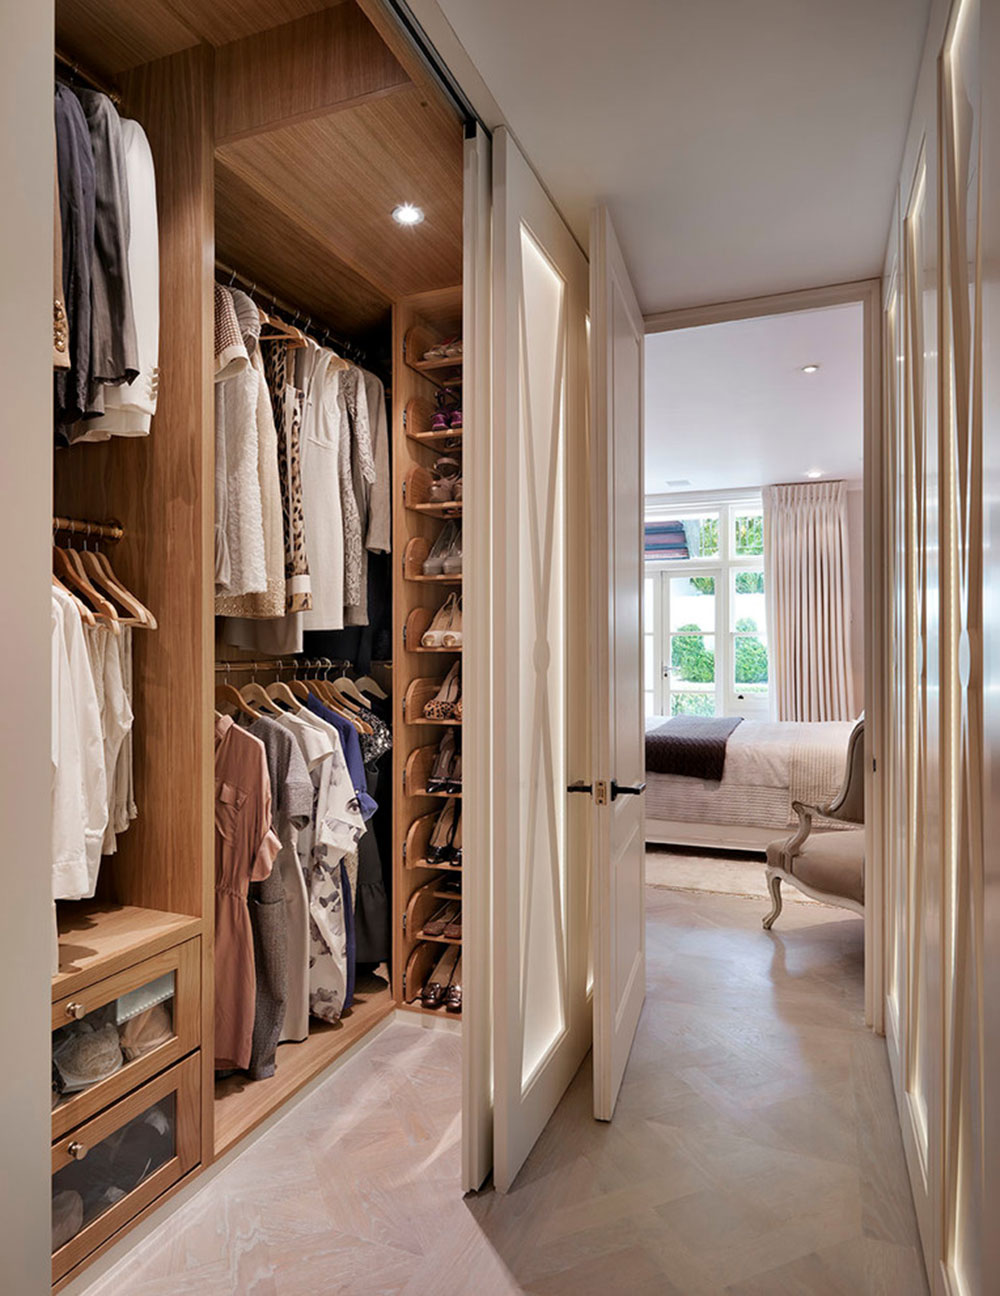 Kensington-Apartments-United-TylerMandic-Ltd Modern And Luxurious Bedroom Interior Design Is Inspiring